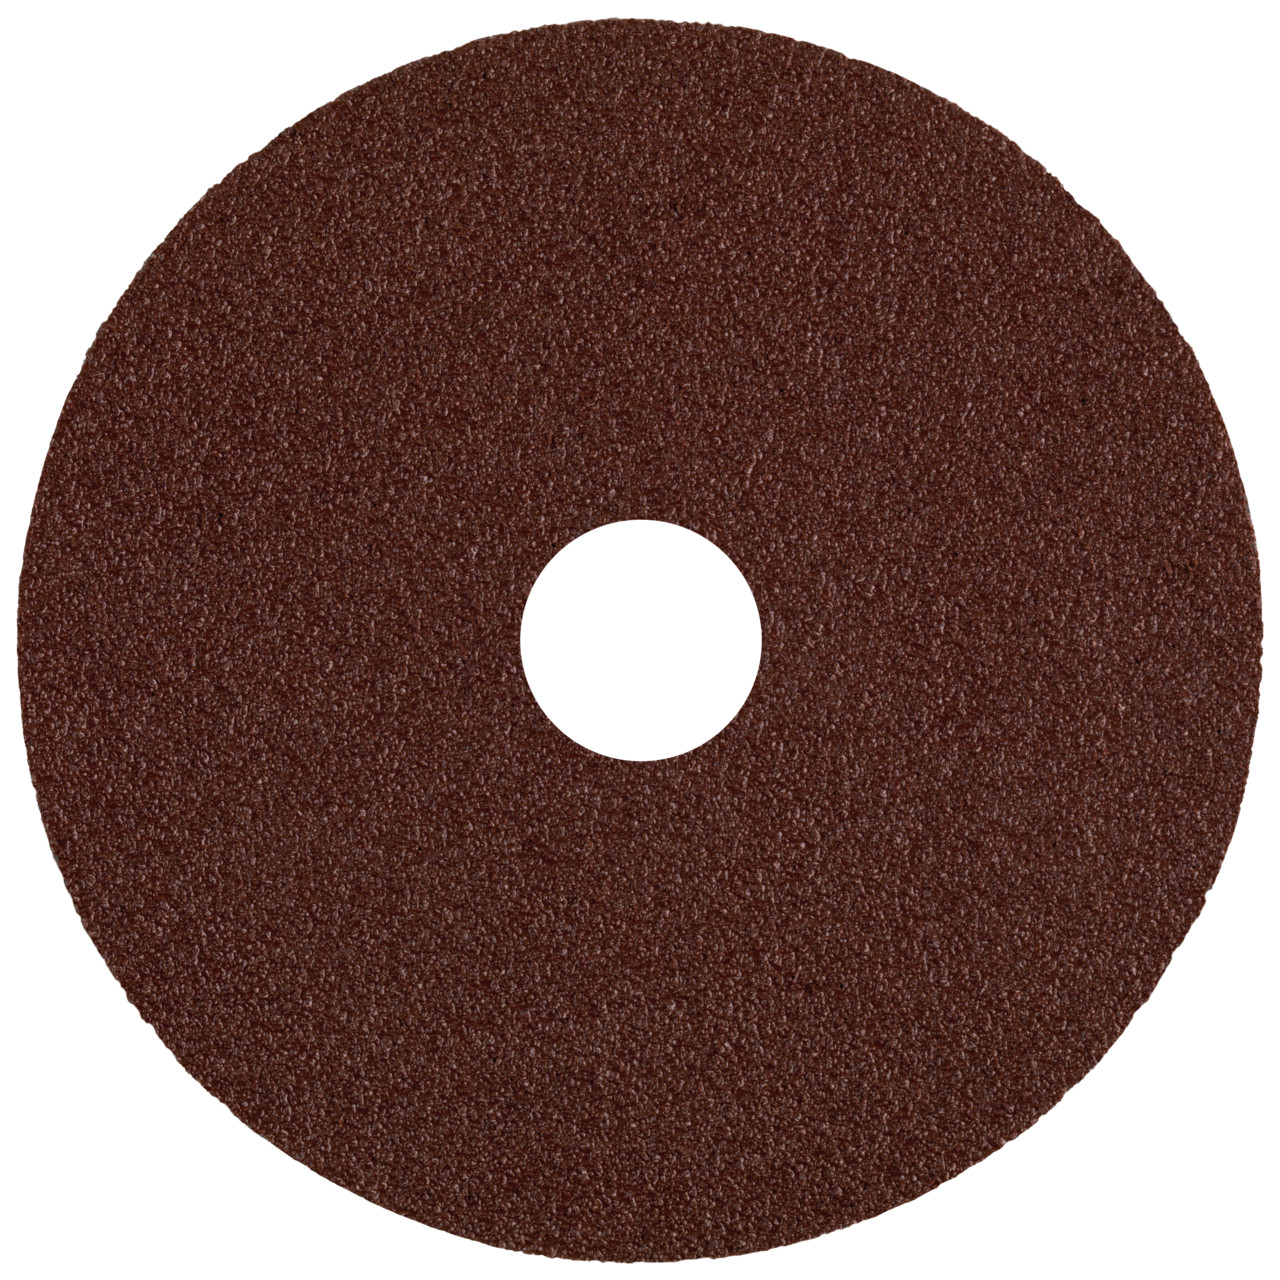 Tyrolit A-B02 V Vulcanised fibre disc DxH 125x22 For steel, non-ferrous metals and wood, P80, shape: DISC, Art. 34286503